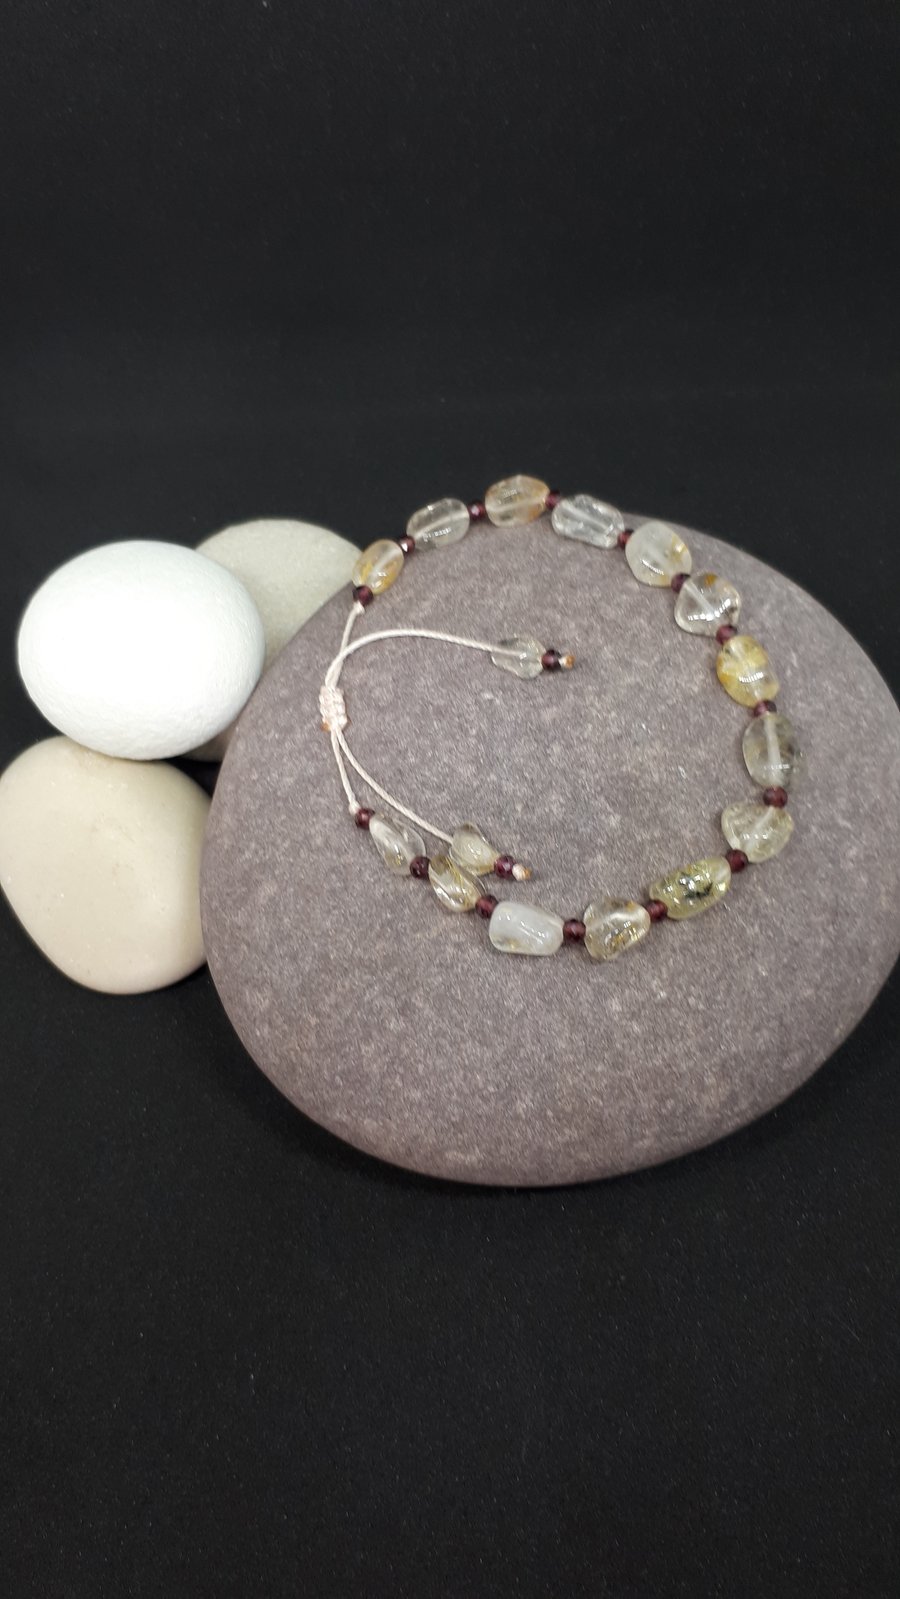 Rutile quartz and garnet bracelet one size macrame January birthstone